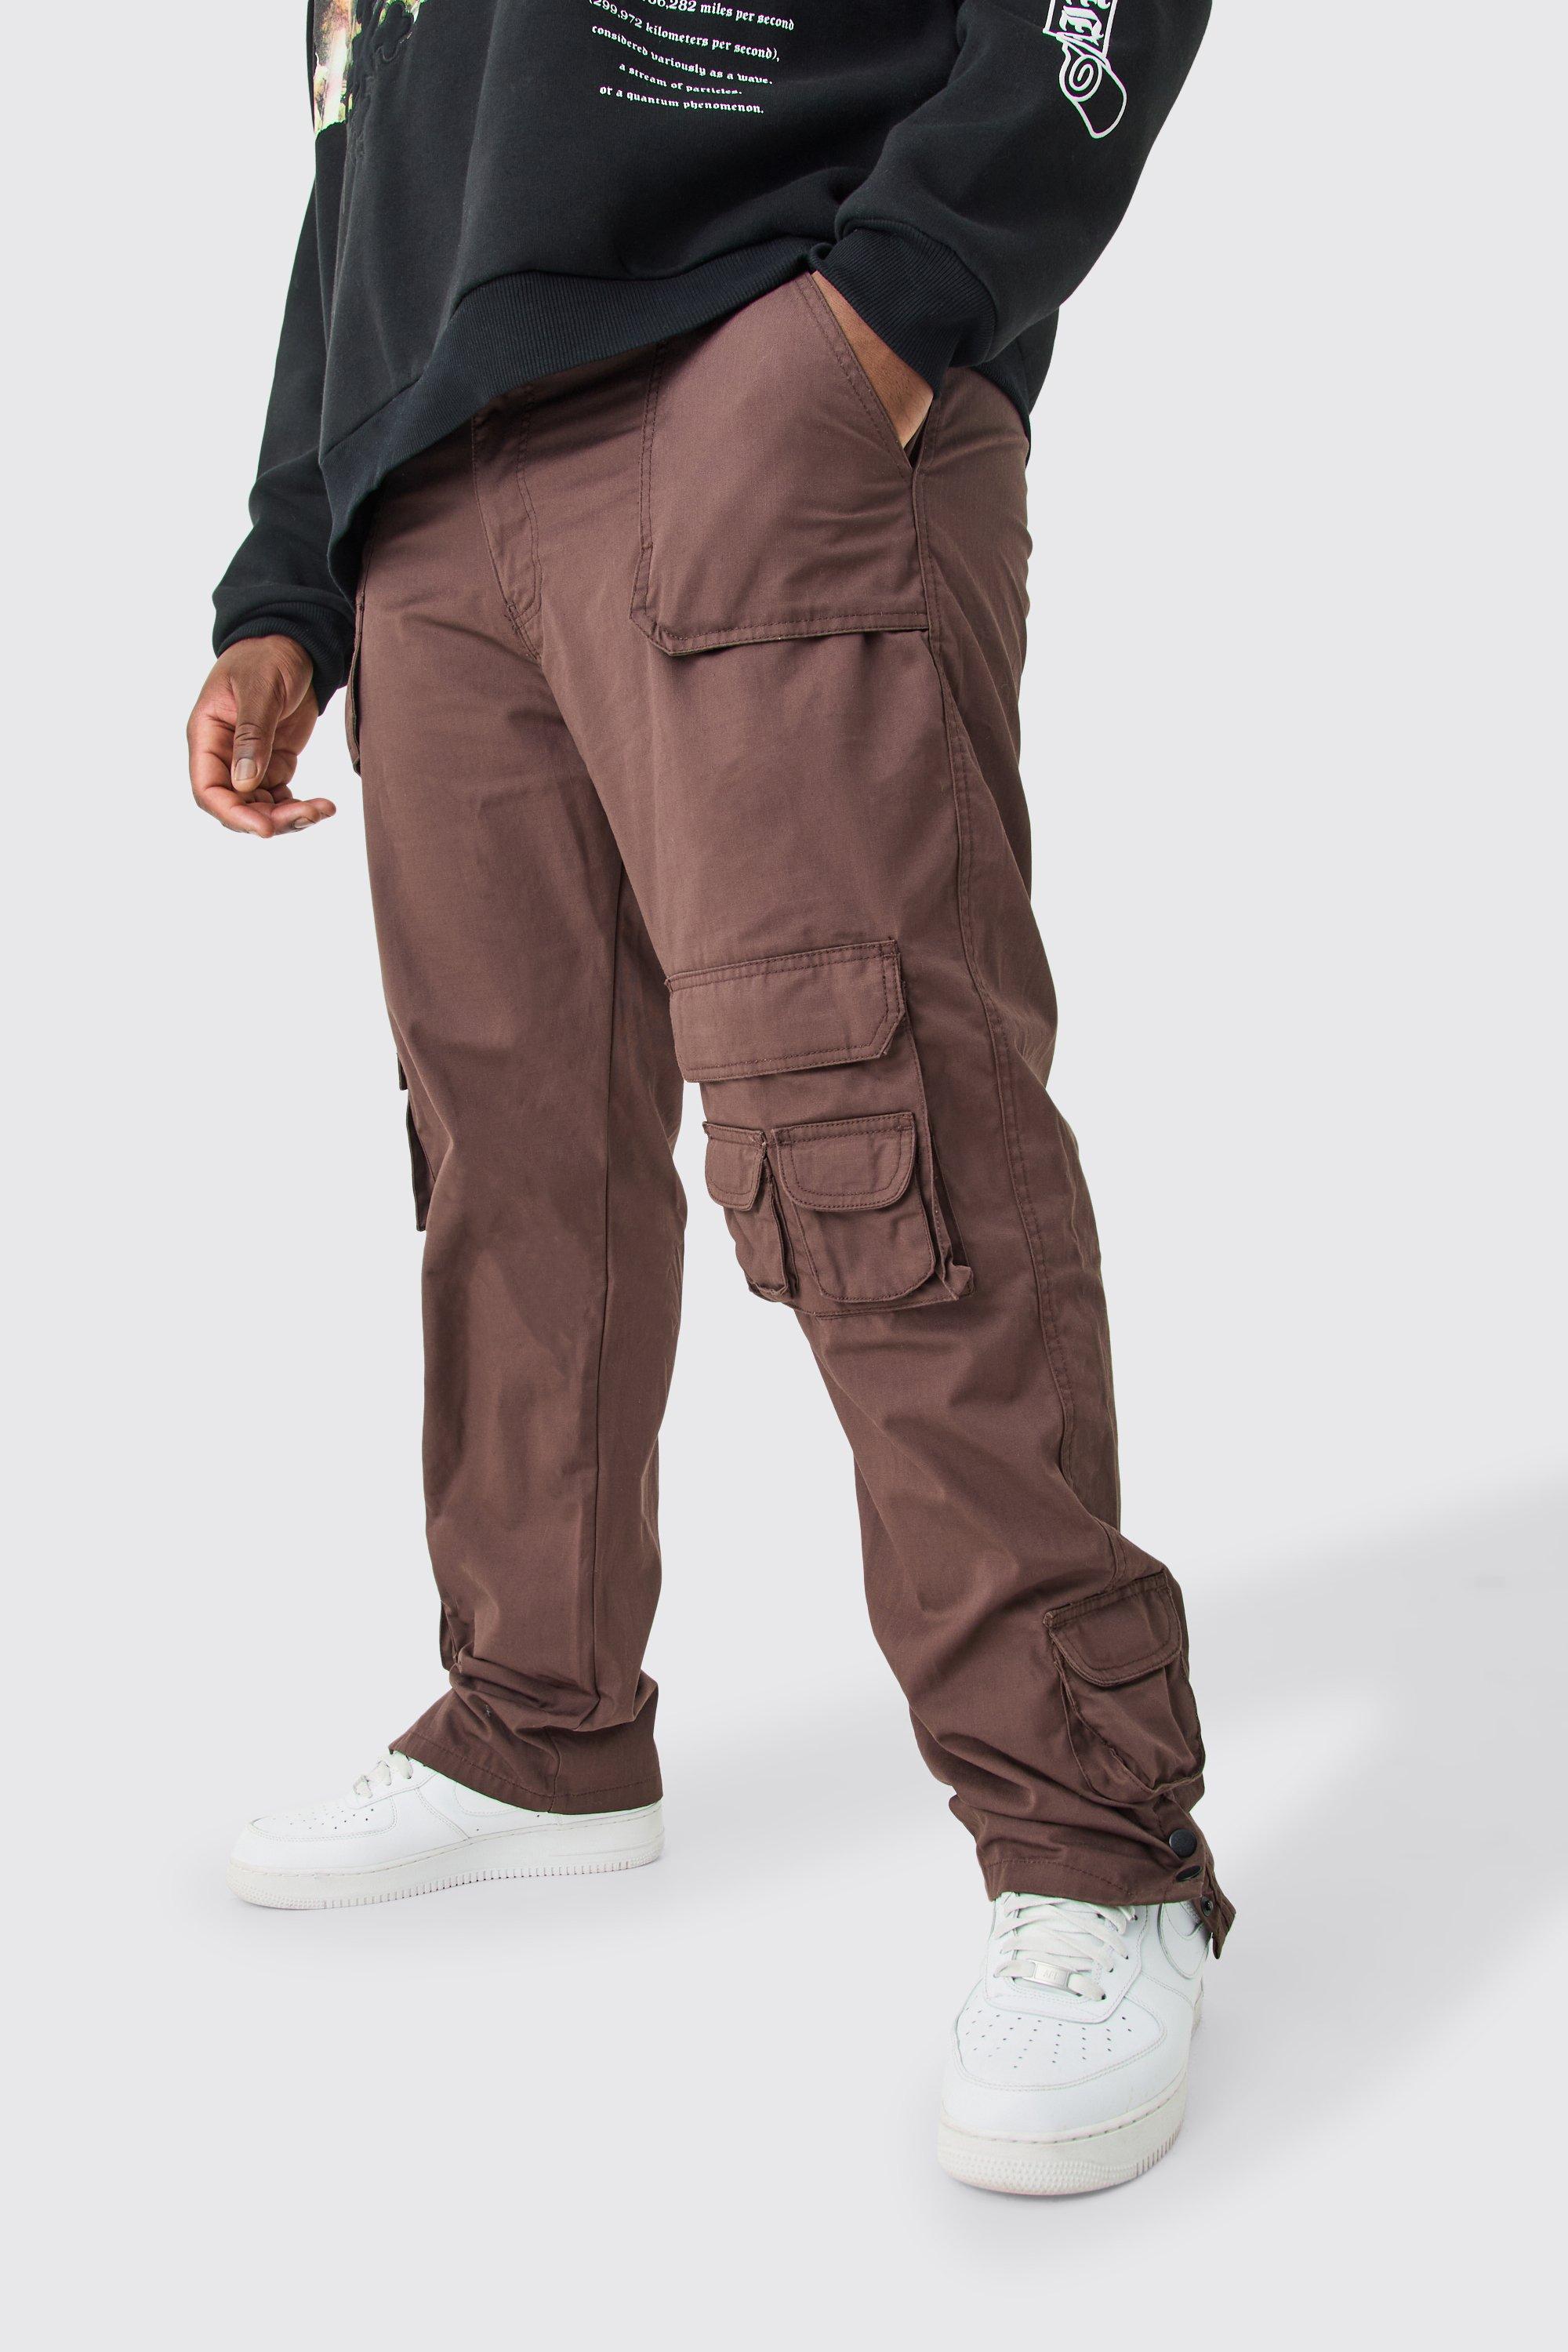 grande taille - pantalon cargo à poches homme - brun - 46, brun